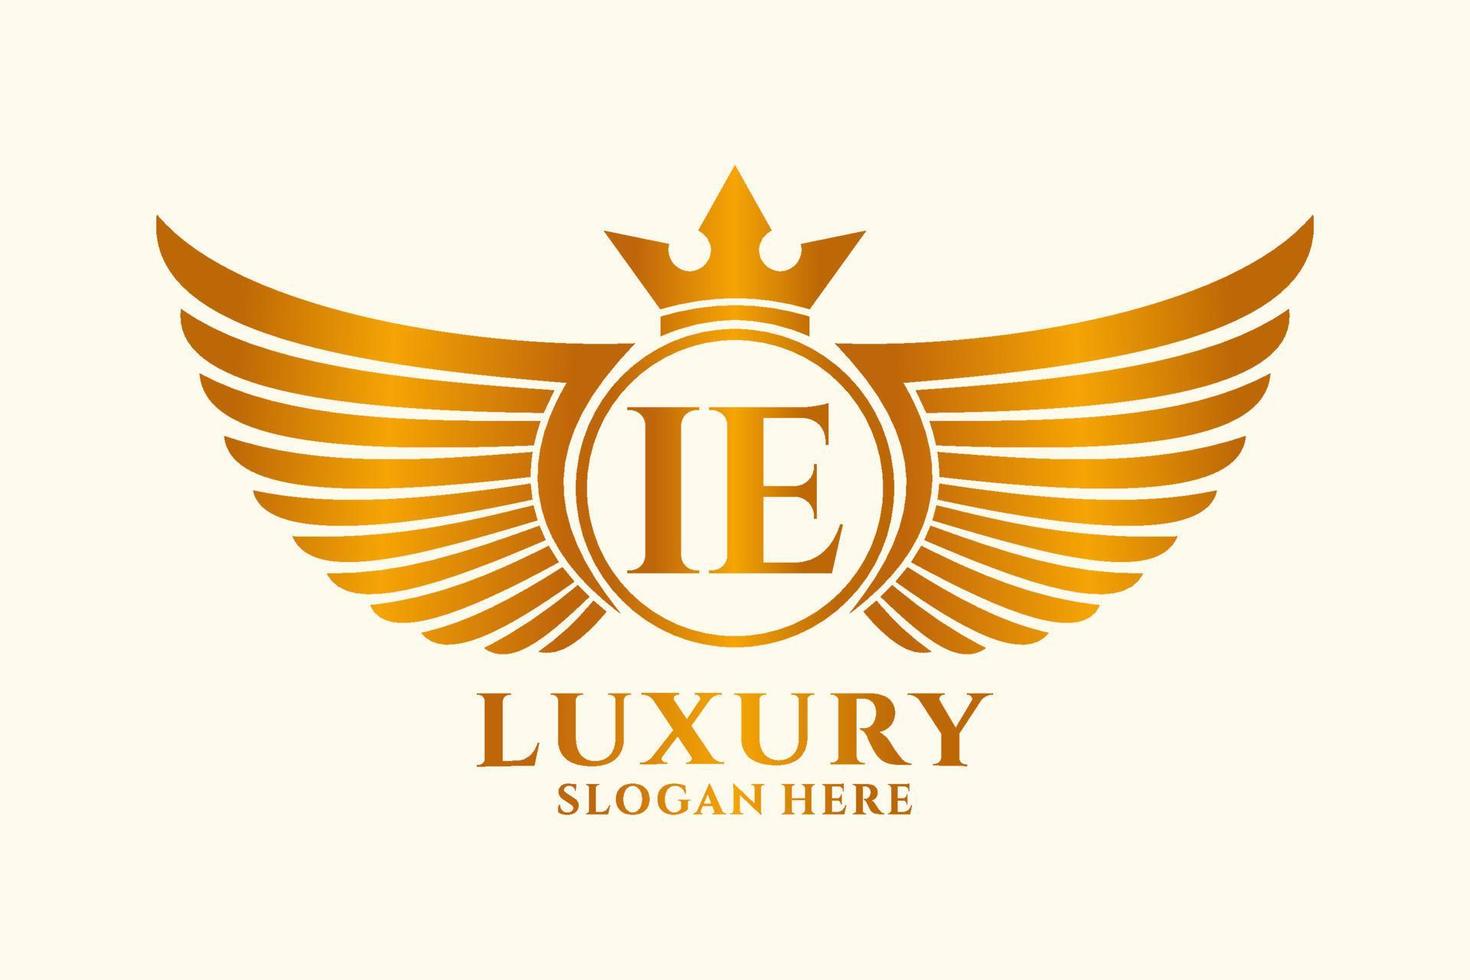 luxe Koninklijk vleugel brief d.w.z kam goud kleur logo vector, zege logo, kam logo, vleugel logo, vector logo sjabloon.